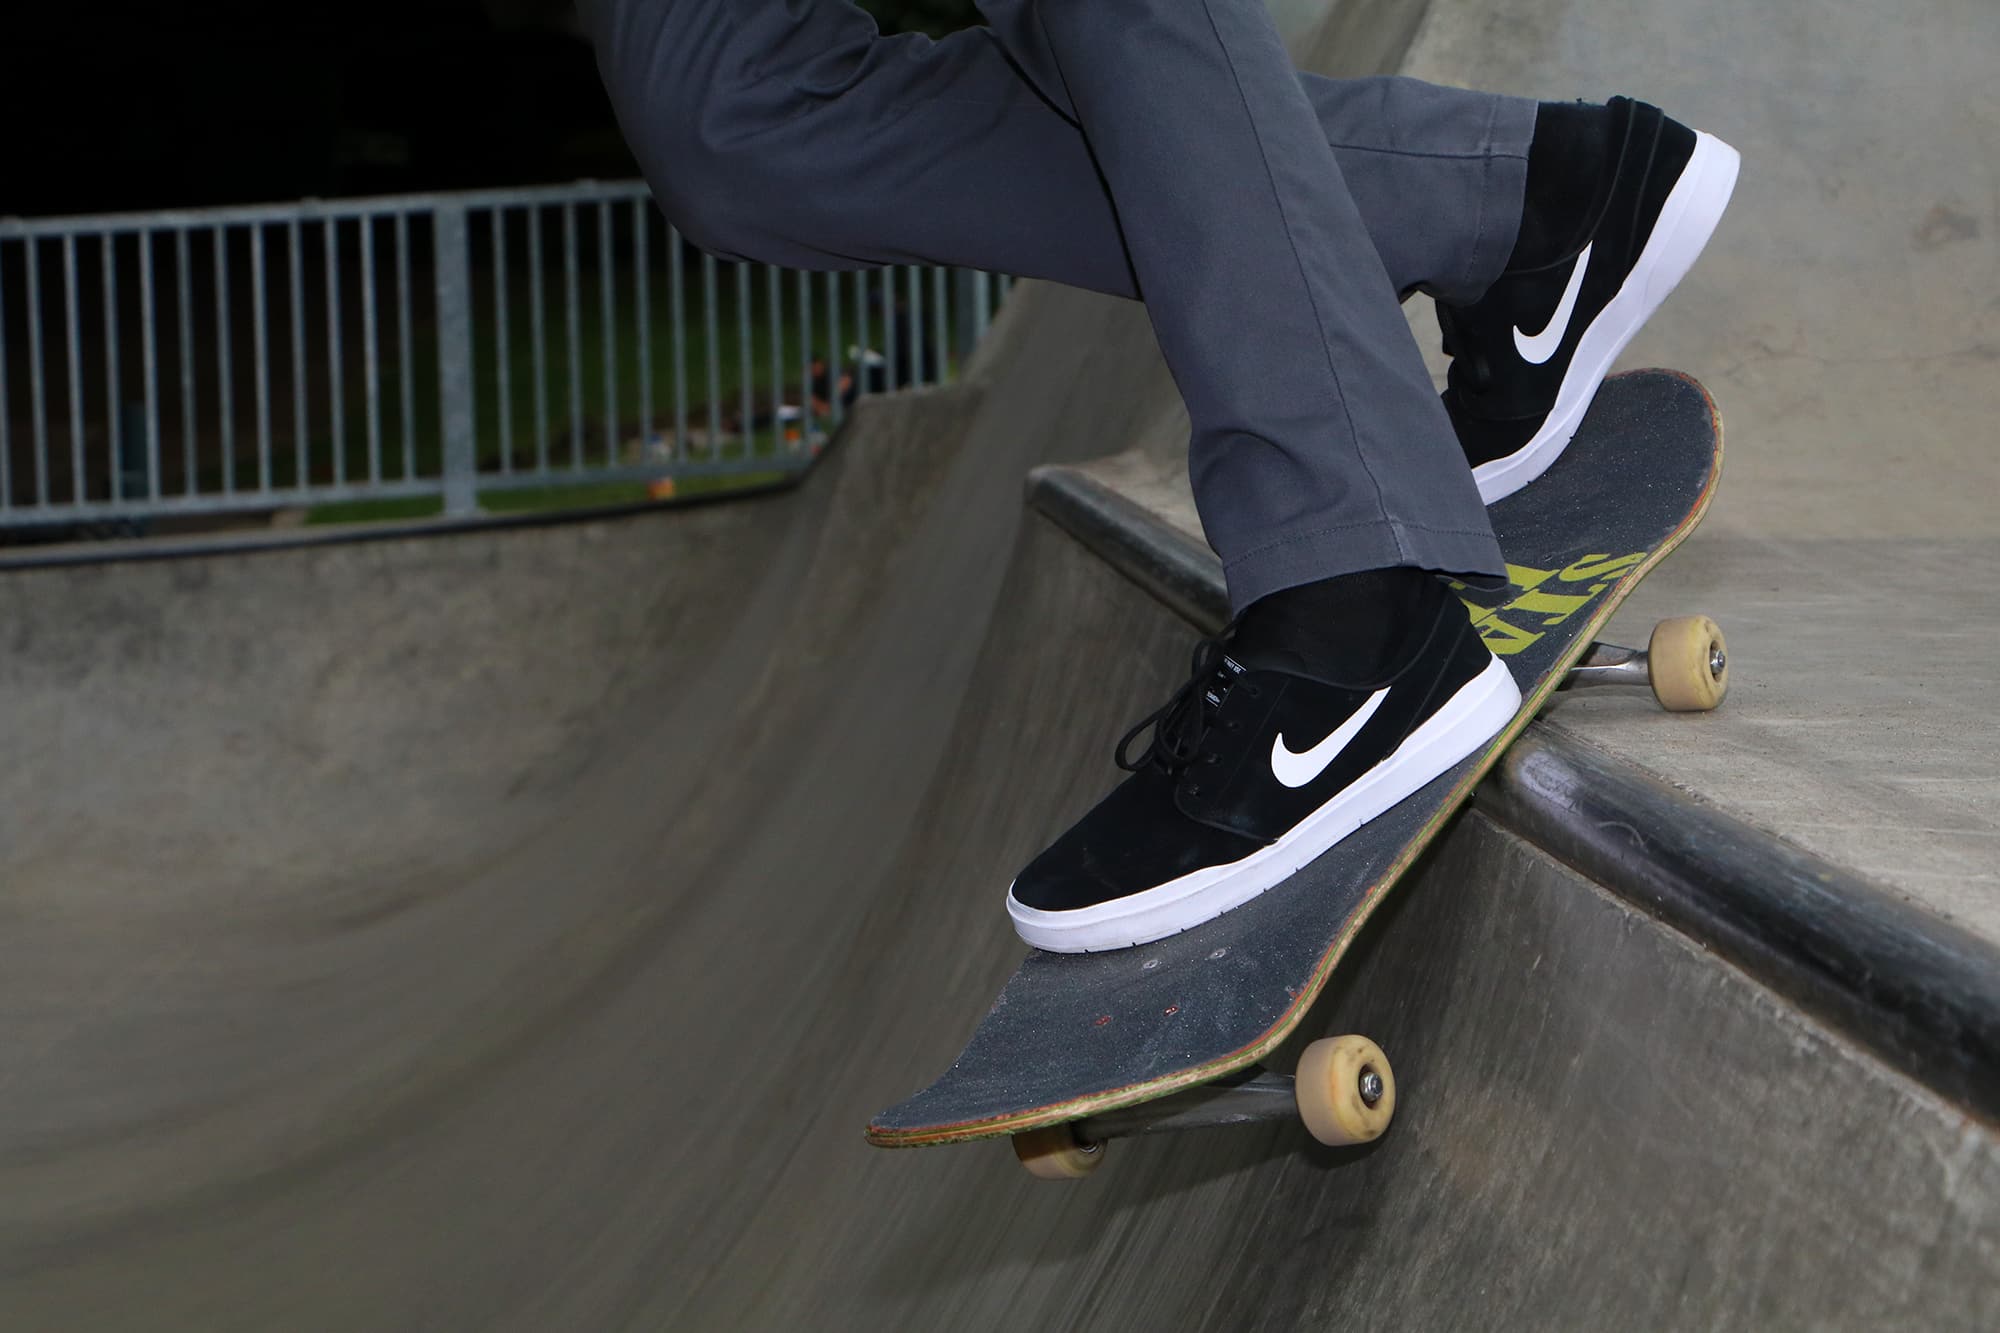 Gebeurt barst Piepen Nike SB Janoski Hyperfeel Skate Shoes Wear Test Review | Tactics